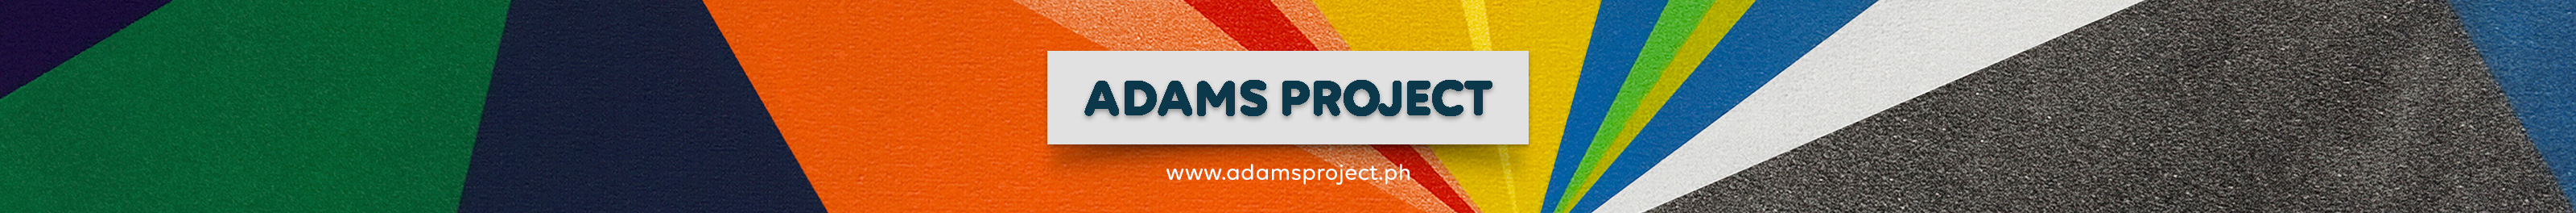 ADAMS PROJECT's profile banner